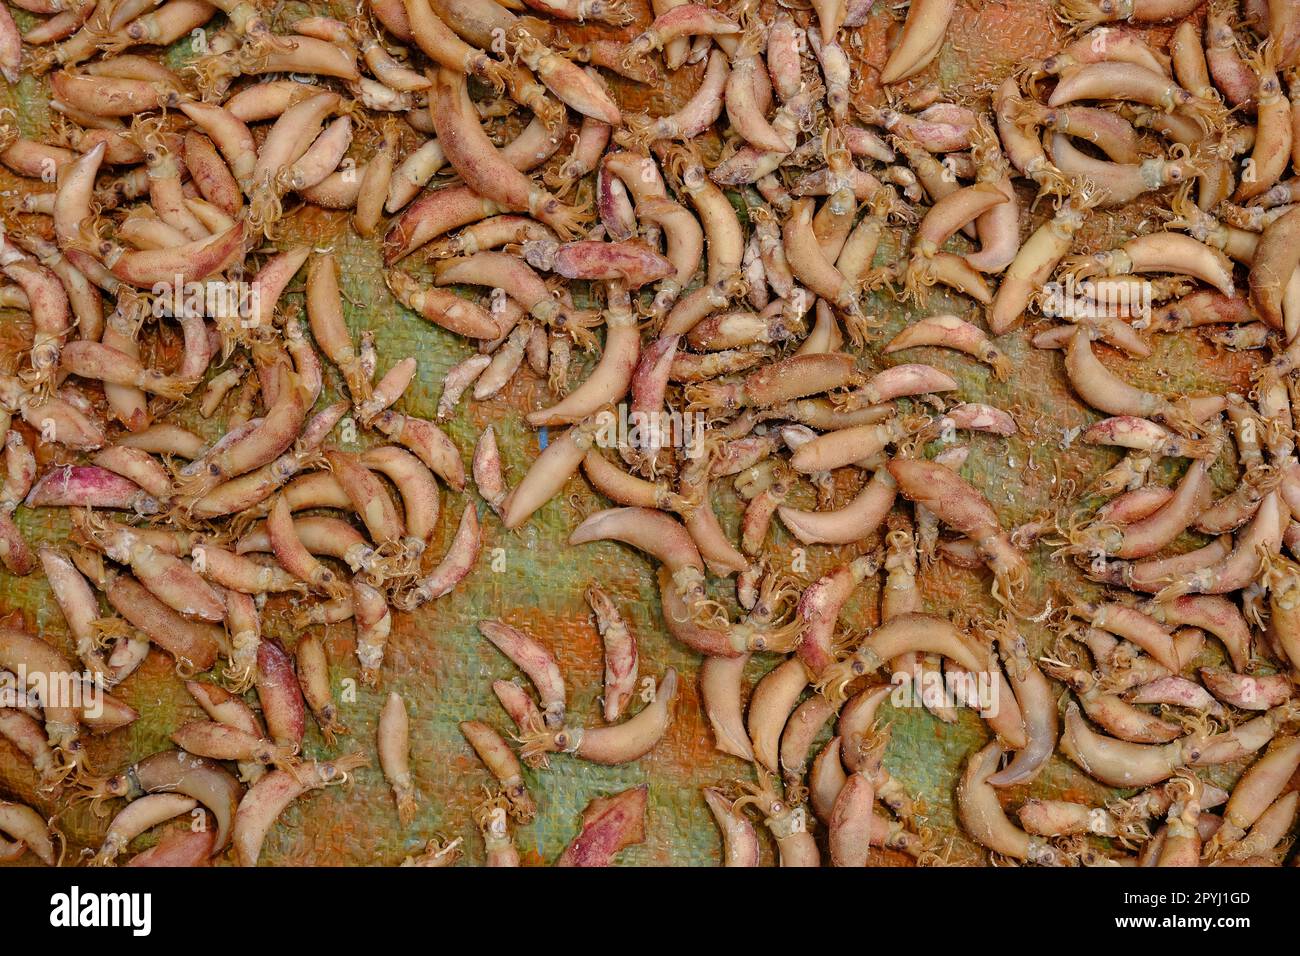 Indonesia Anambas Islands - Telaga Island - Sun dried squid Stock Photo